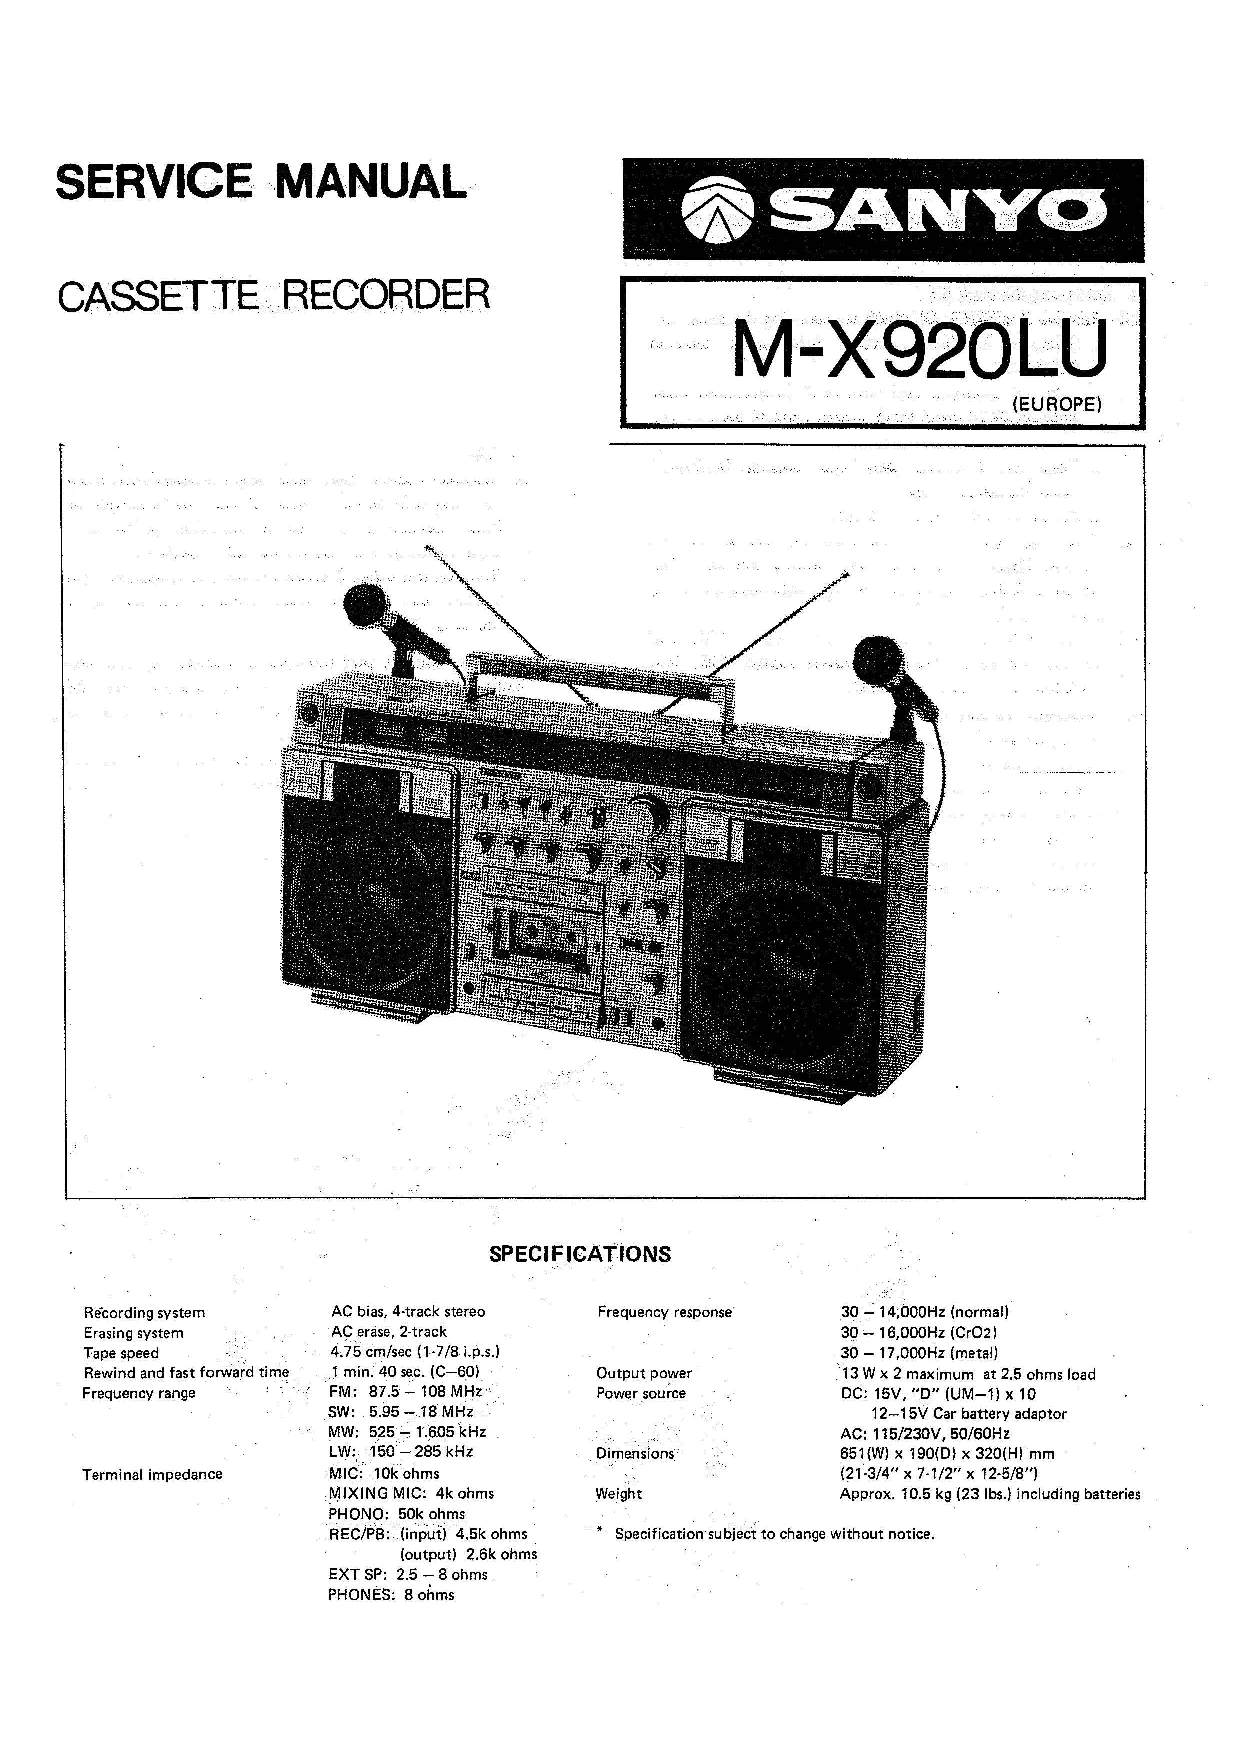 Sanyo M-X920U Service Manual